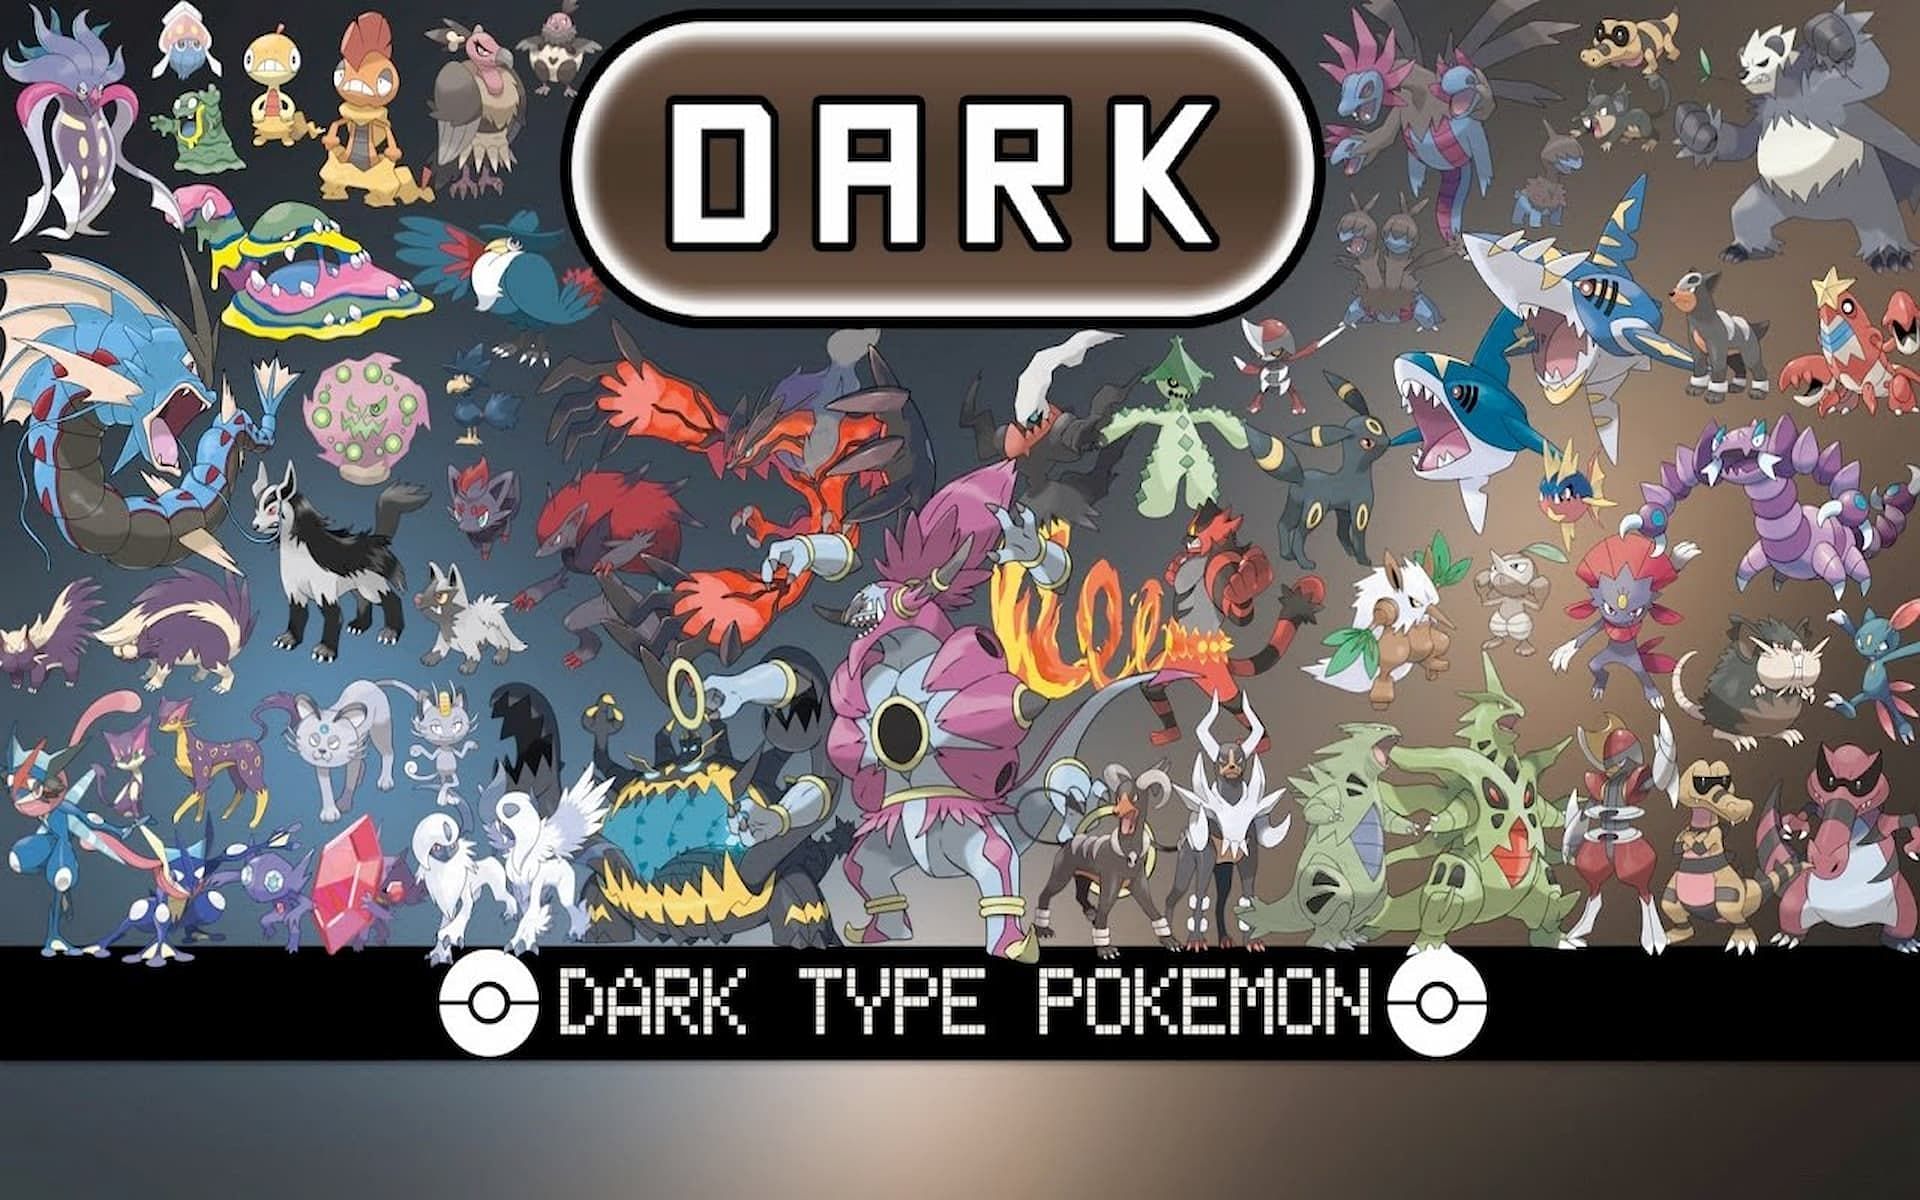 Every Dark Type Pokémon, Mean Type! 